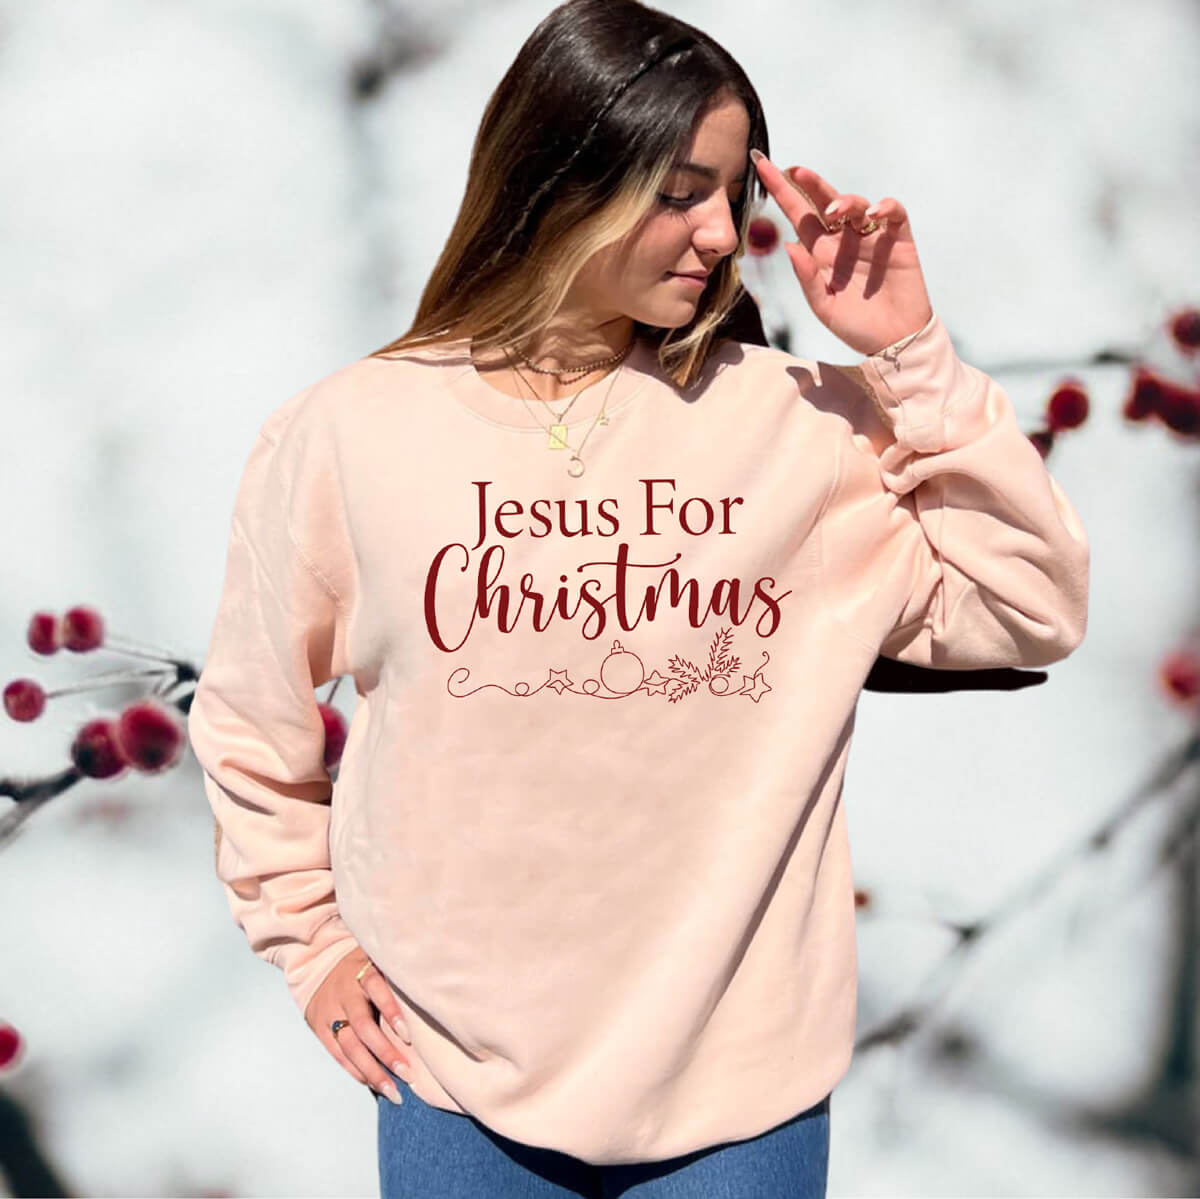 Jesus For Christmas Crewneck Unisex Sweatshirt